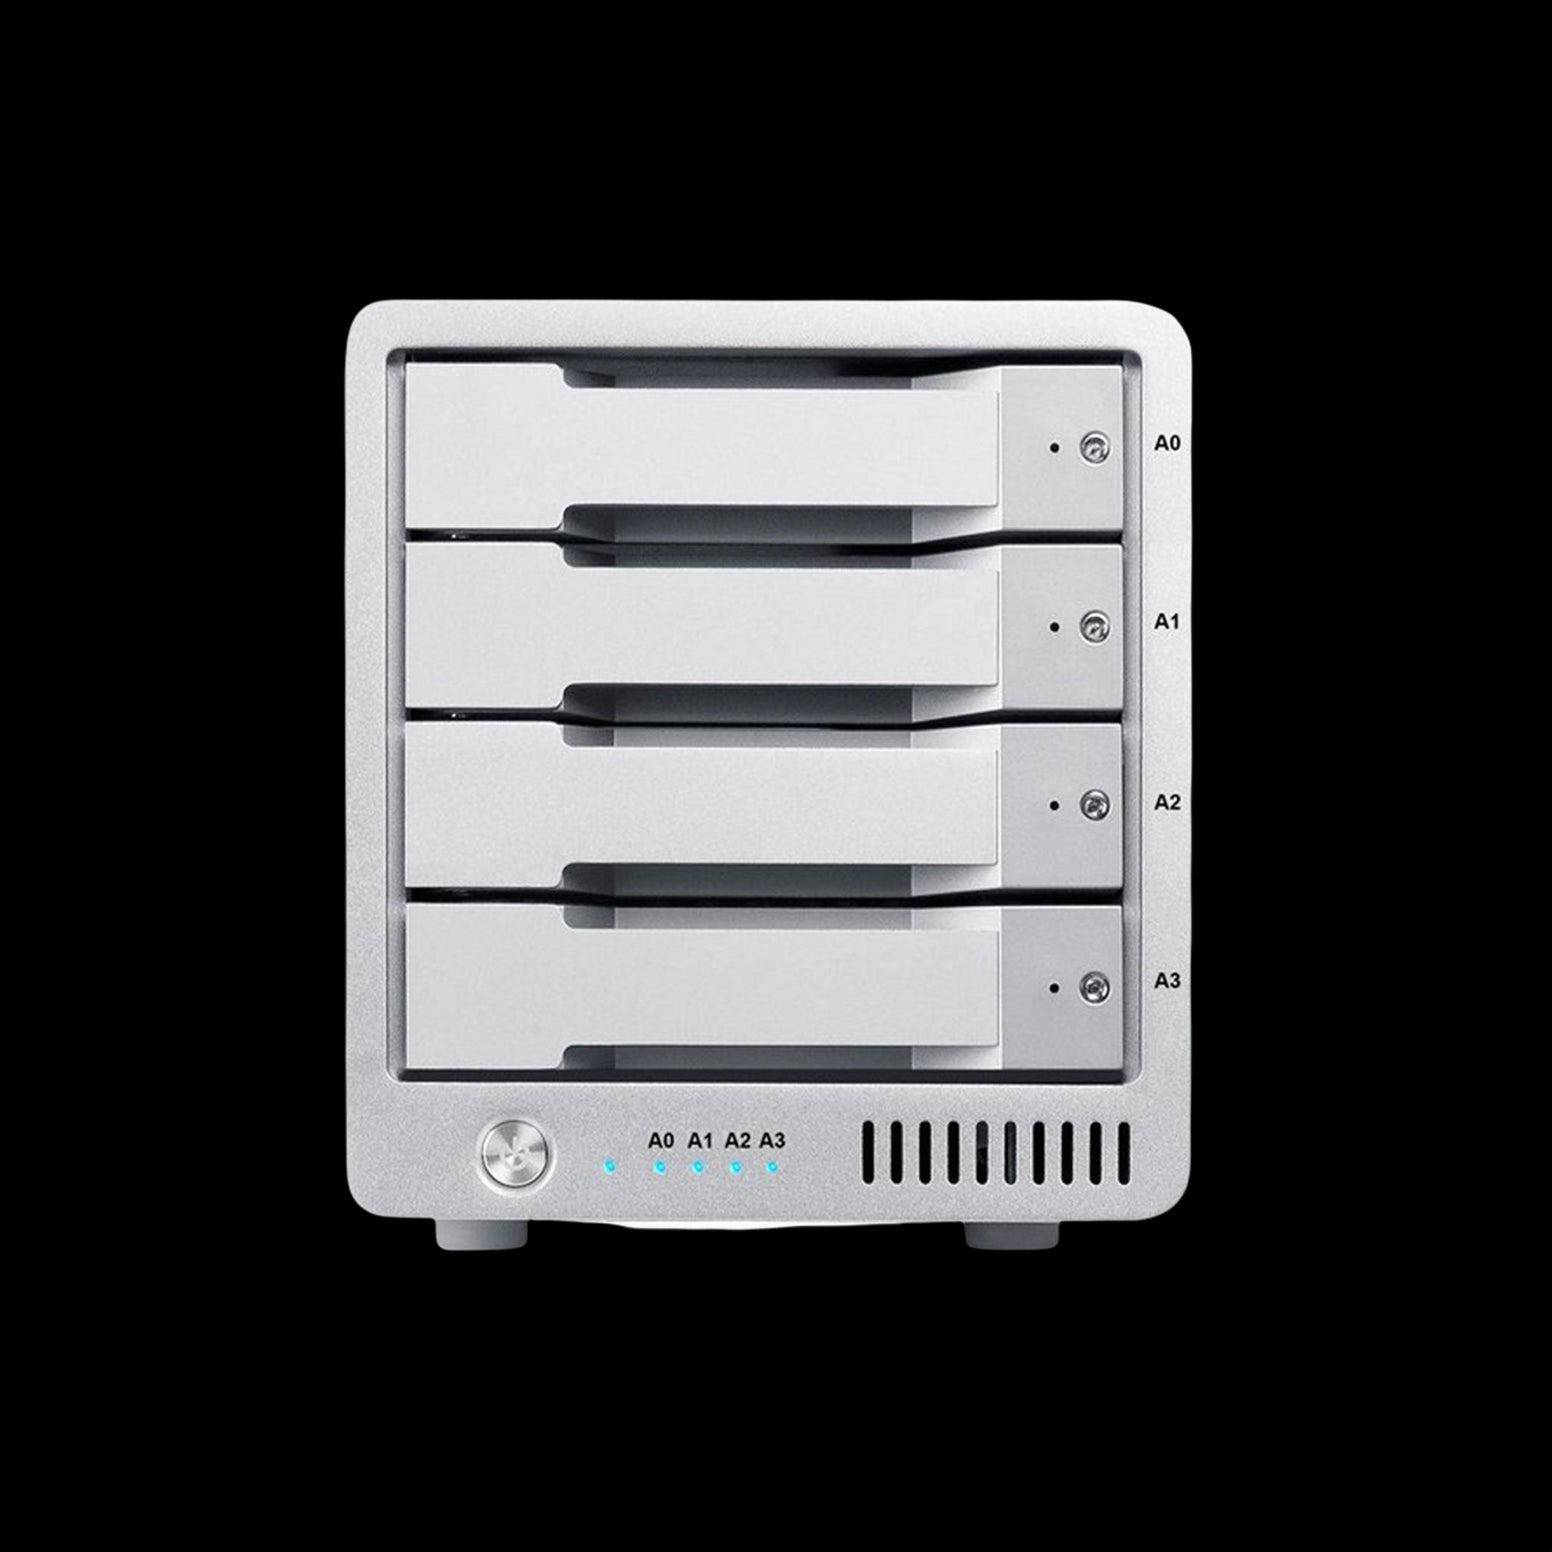 Caldigit 12TB HDD T4 Thunderbolt 3 RAID External Storage Solution - Discontinued